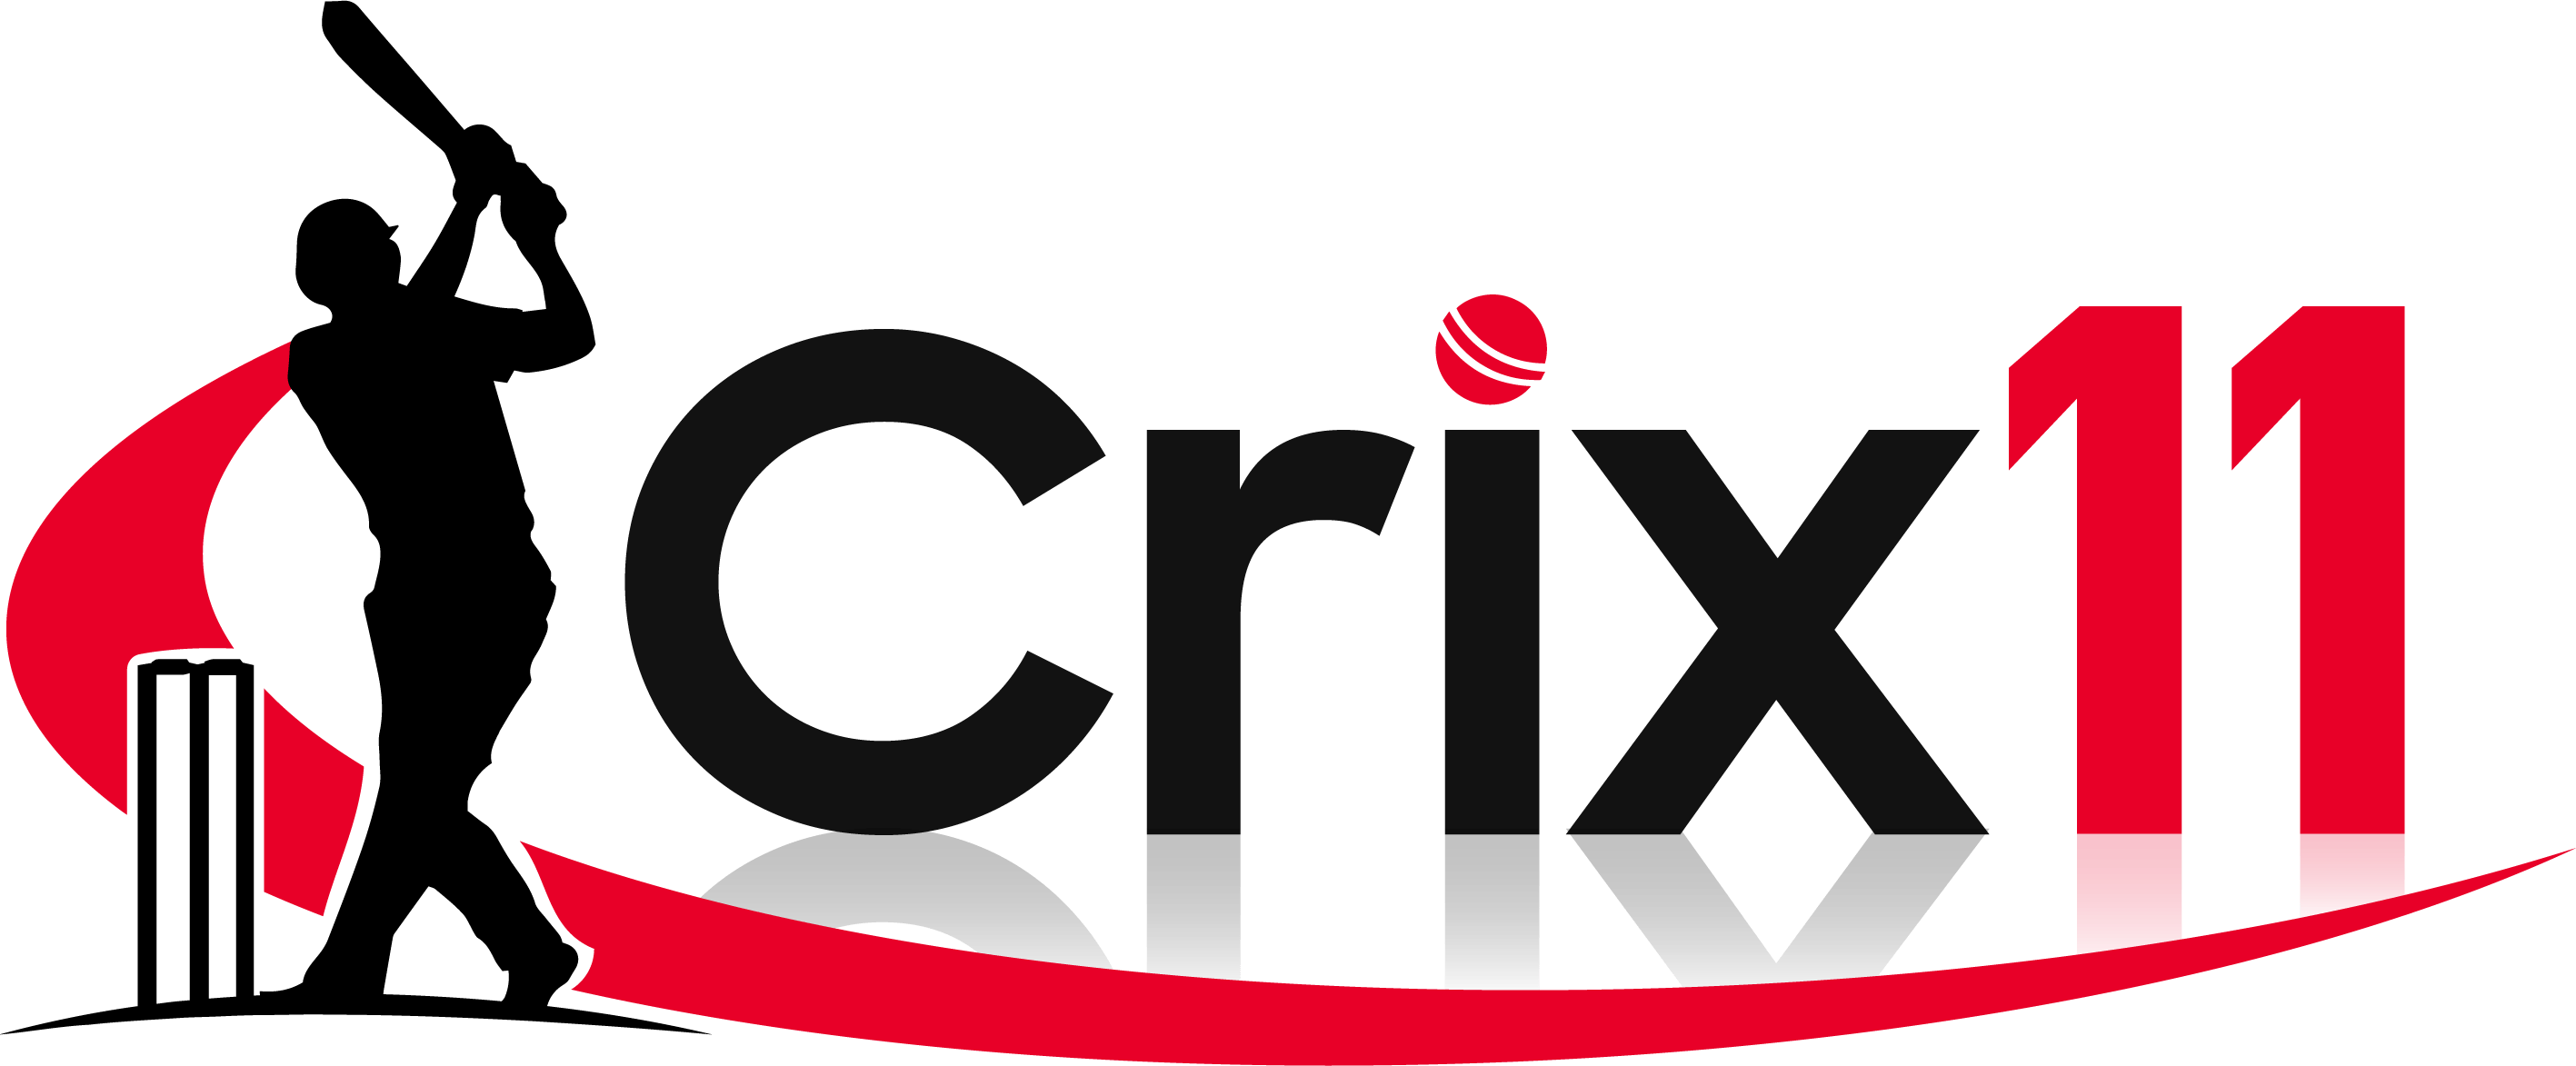 Cricket clipart ipl, Cricket ipl Transparent FREE for download on